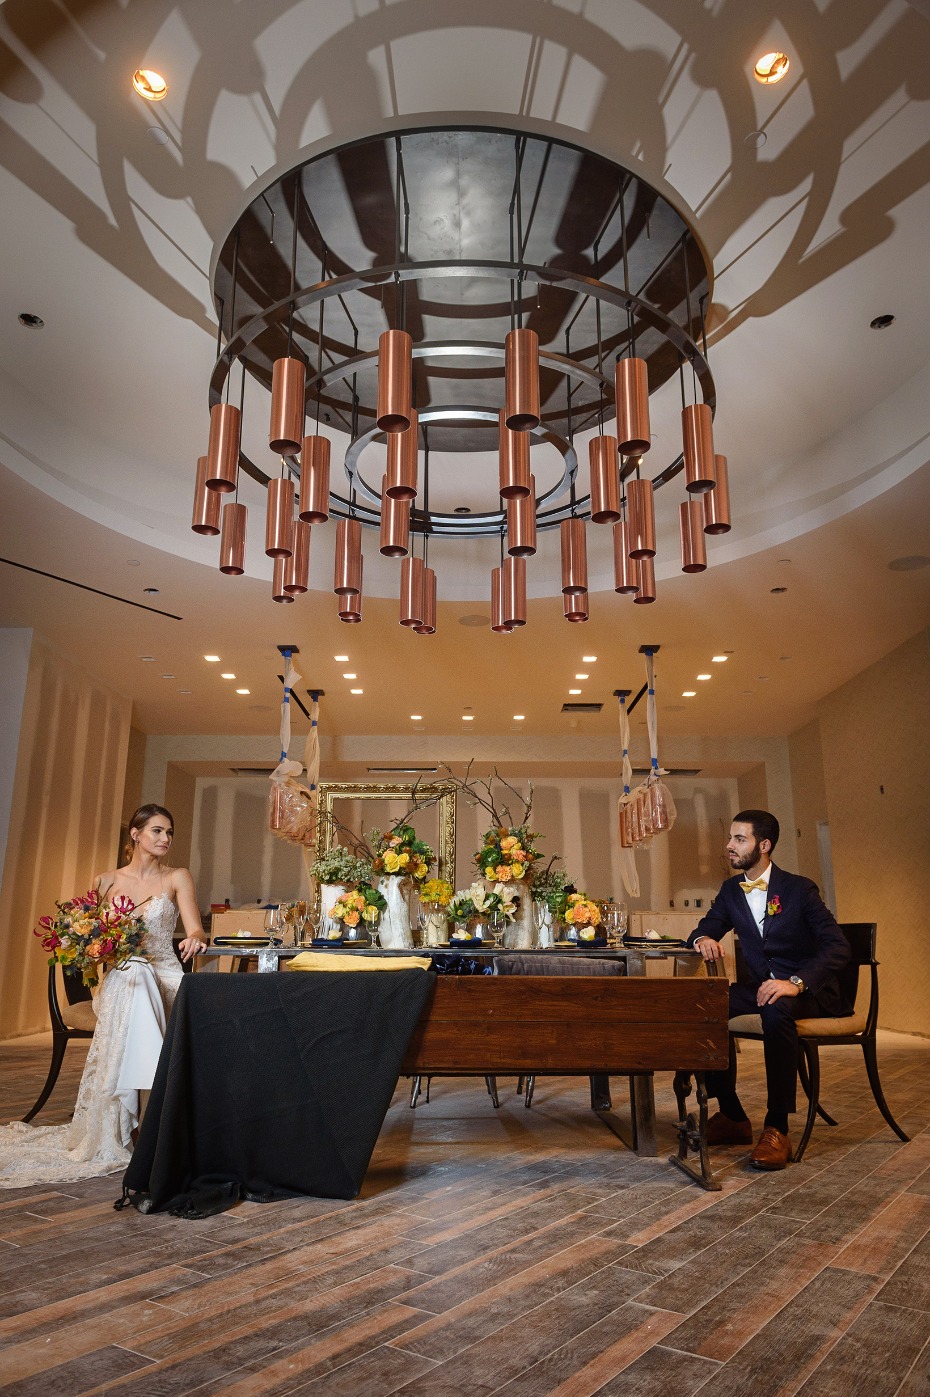 The Art Ovation Hotel is your wedding hotspot